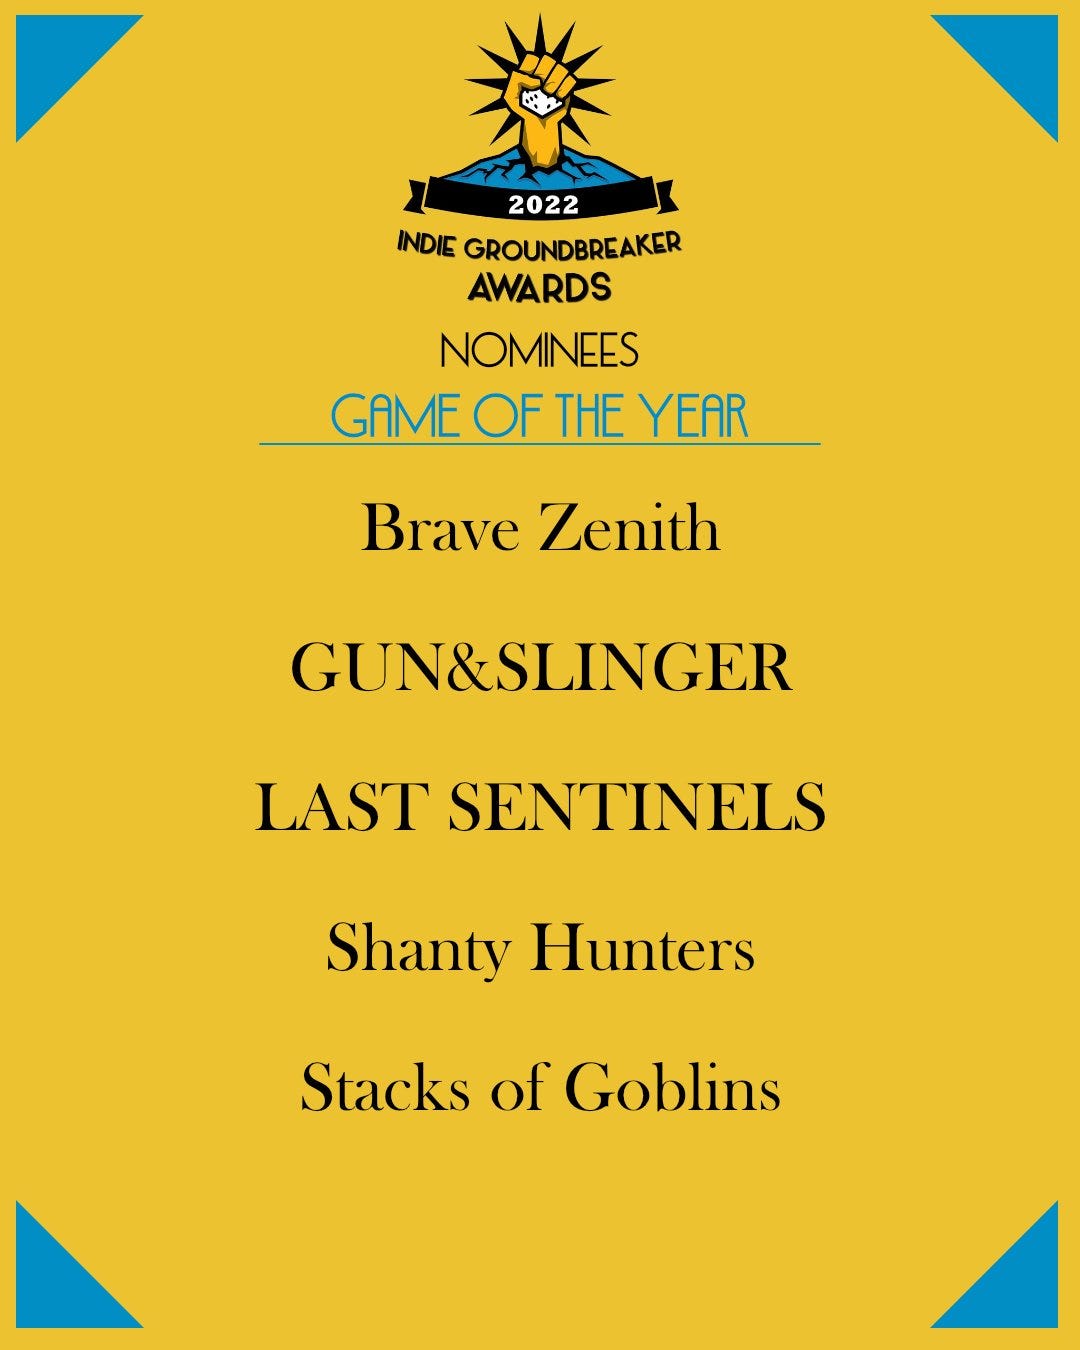 2022 Indie Groundbreaker Awards nominees for Game of the Year:

Brave Zenith
GUN&SLINGER
LAST SENTINELS
Shanty Hunters
Stacks of Goblins